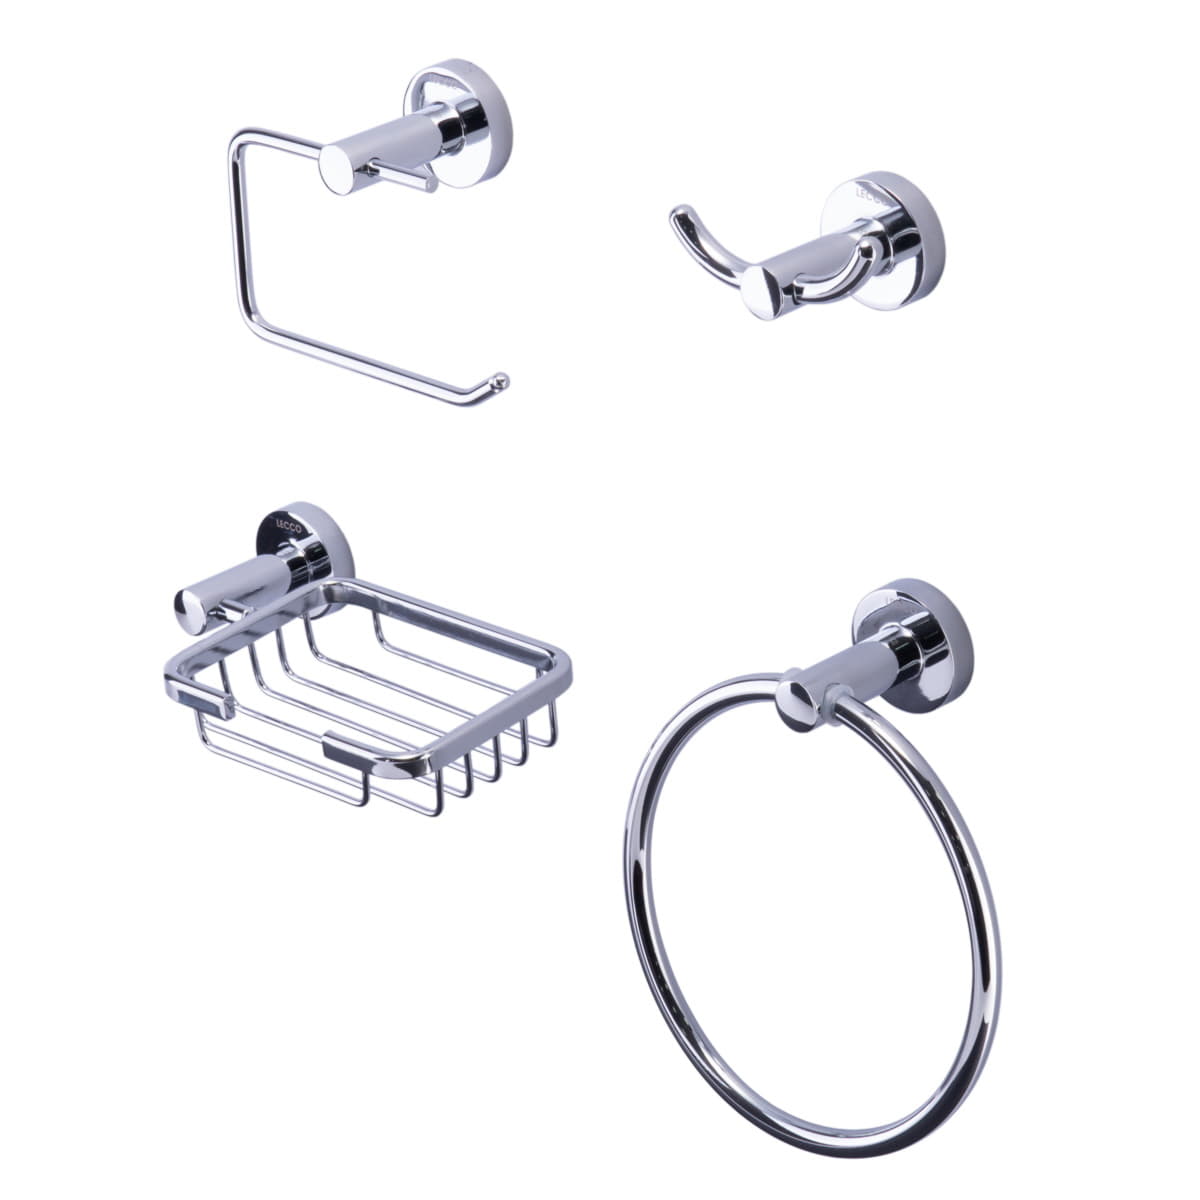 Kit de accesorios para baño Capri x 4 piezas